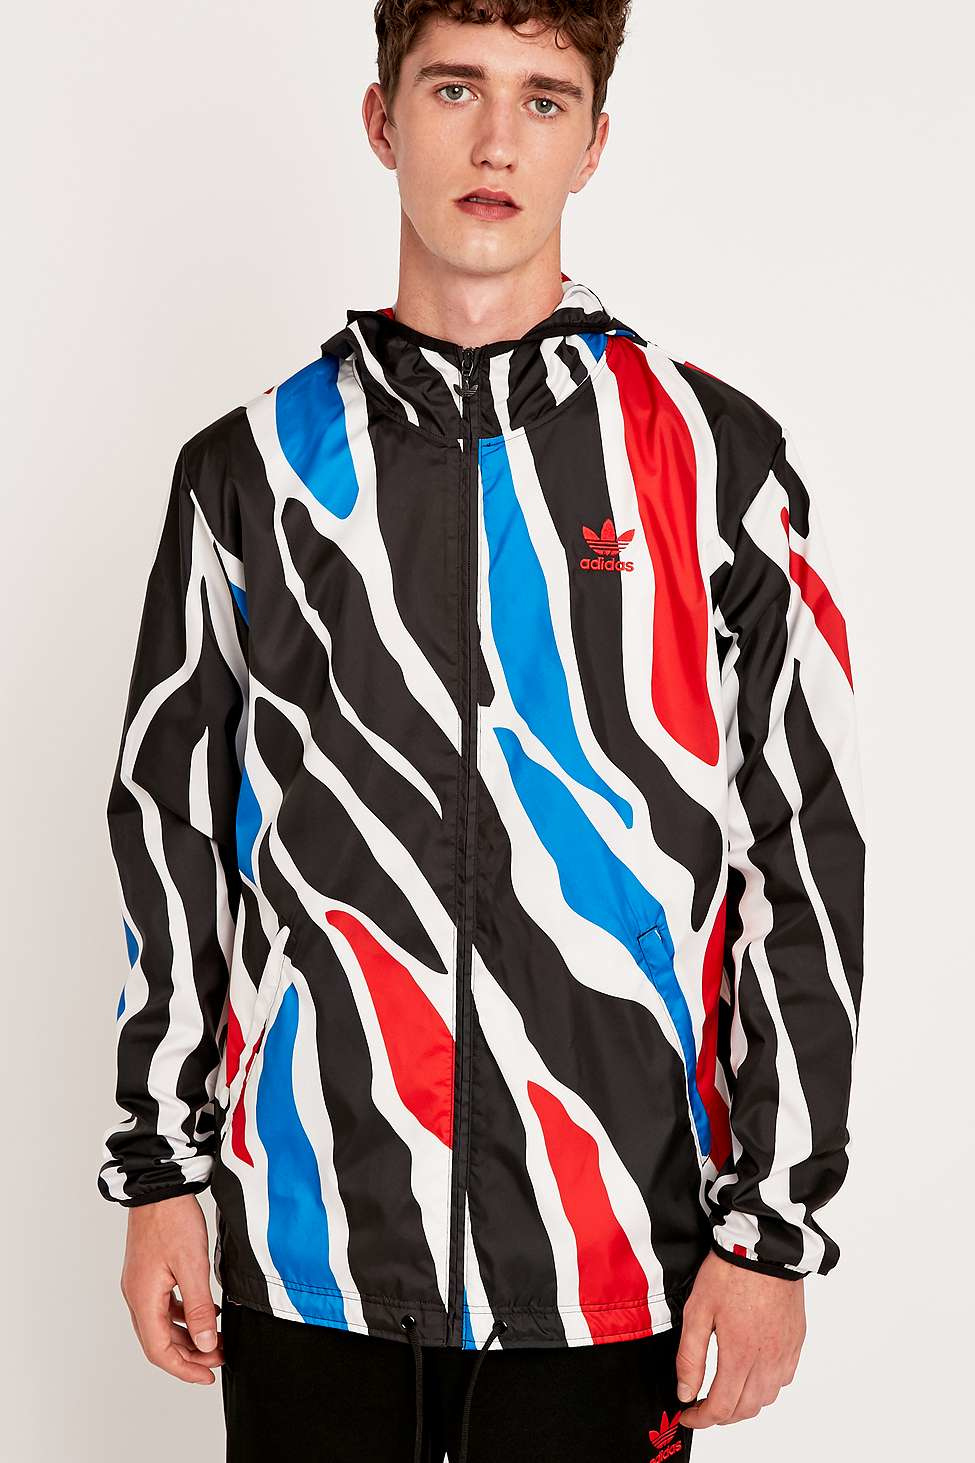 adidas zebra jacket